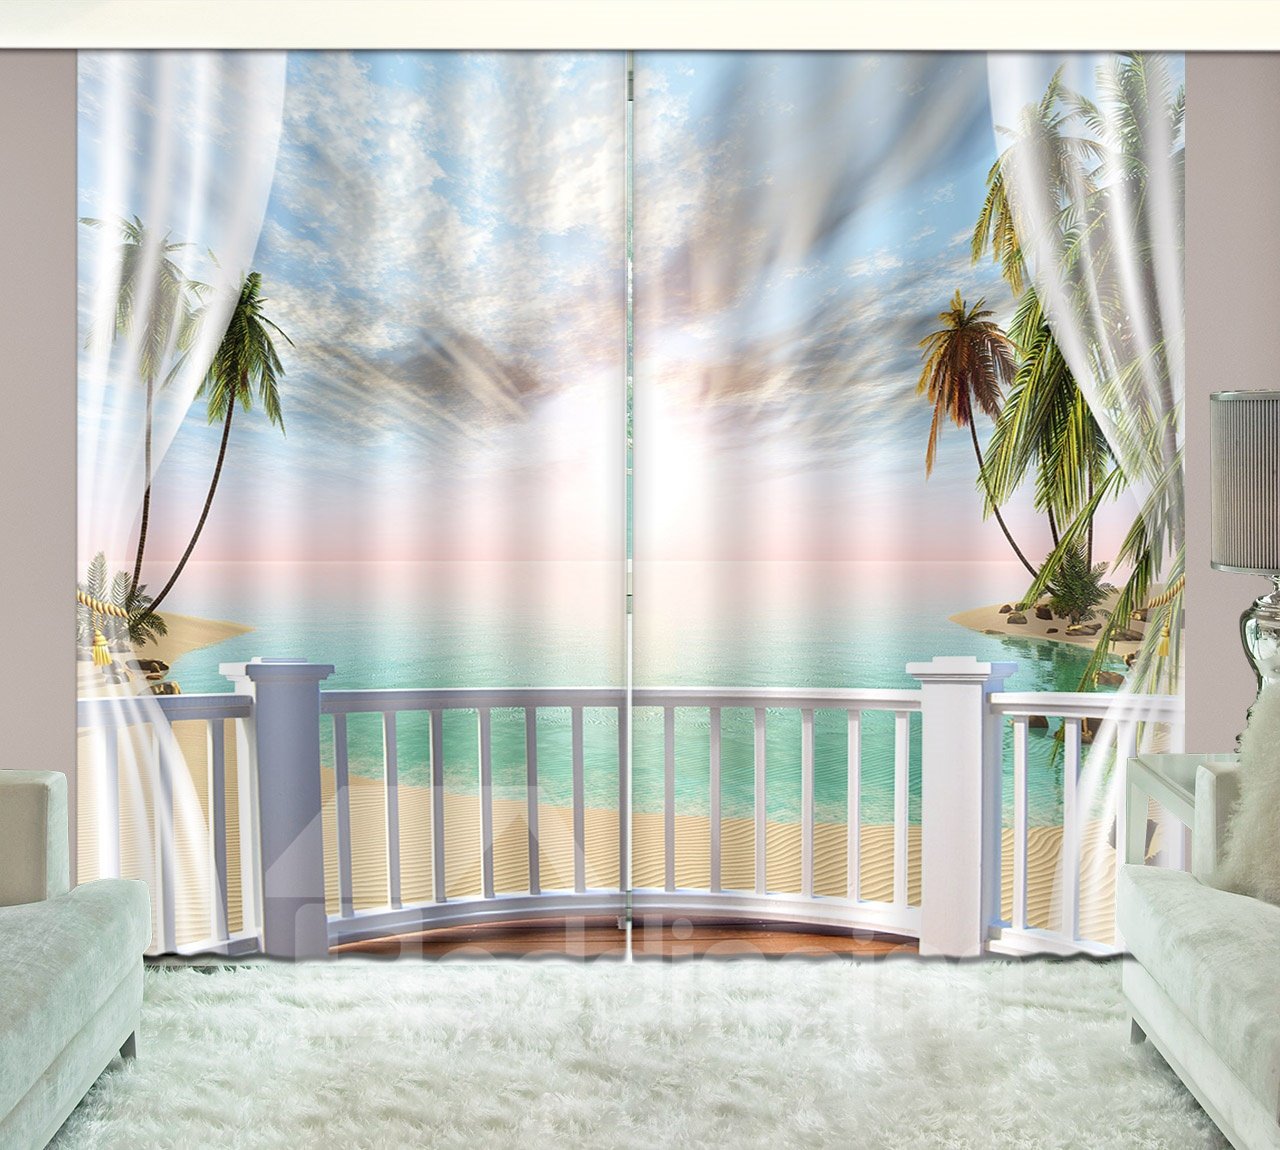 Cortina de sala de estar personalizada con paisaje de cocoteros, puesta de sol de playa tropical impresa en 3D